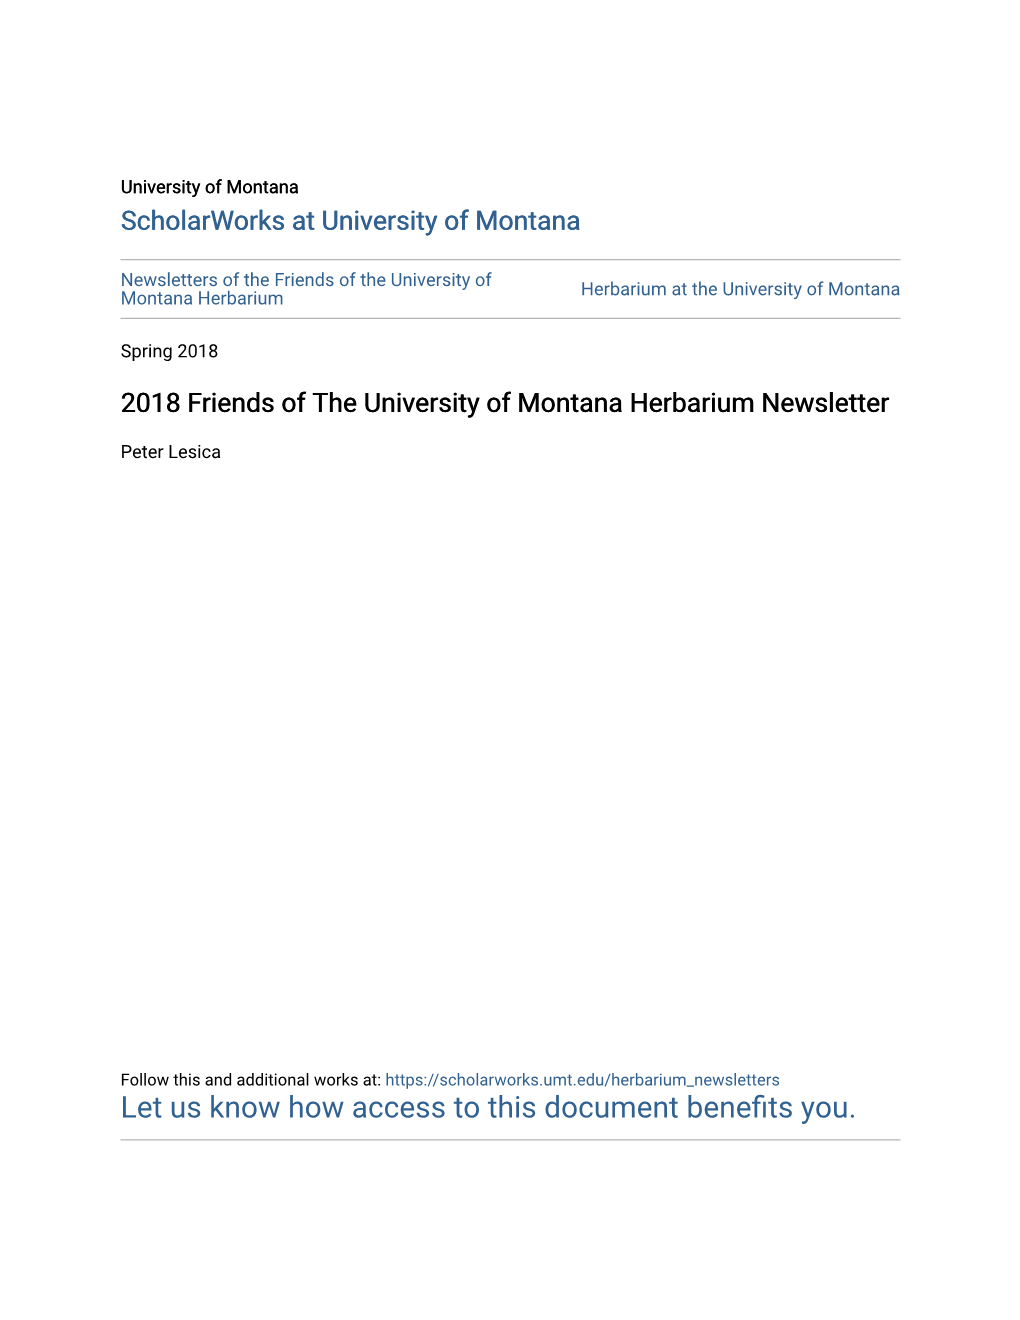 2018 Friends of the University of Montana Herbarium Newsletter